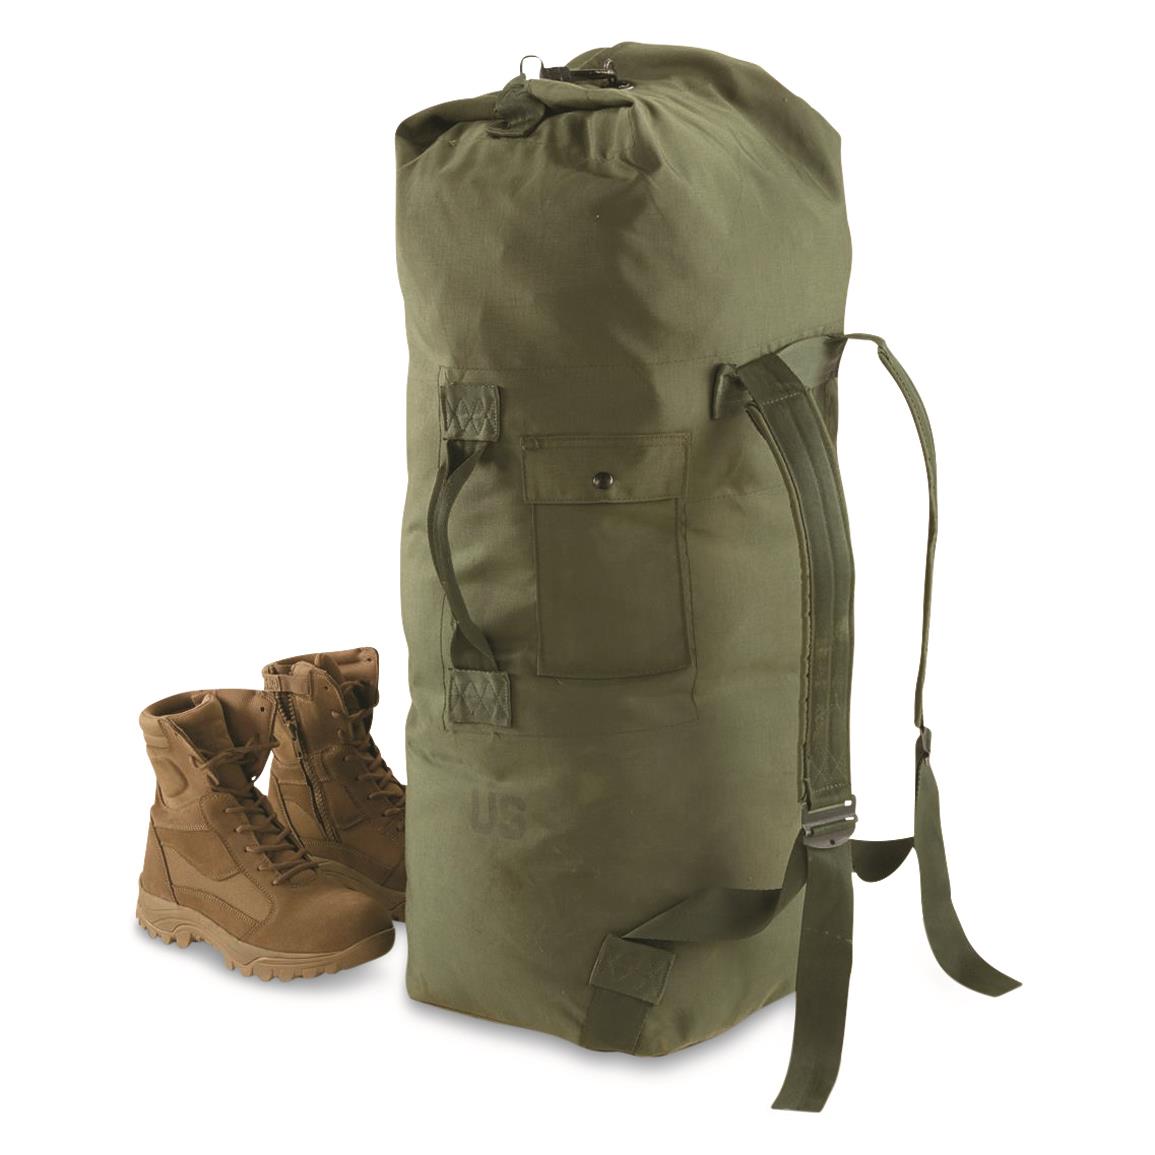 U.S. Military Surplus Duffel Bag, New, Olive Drab